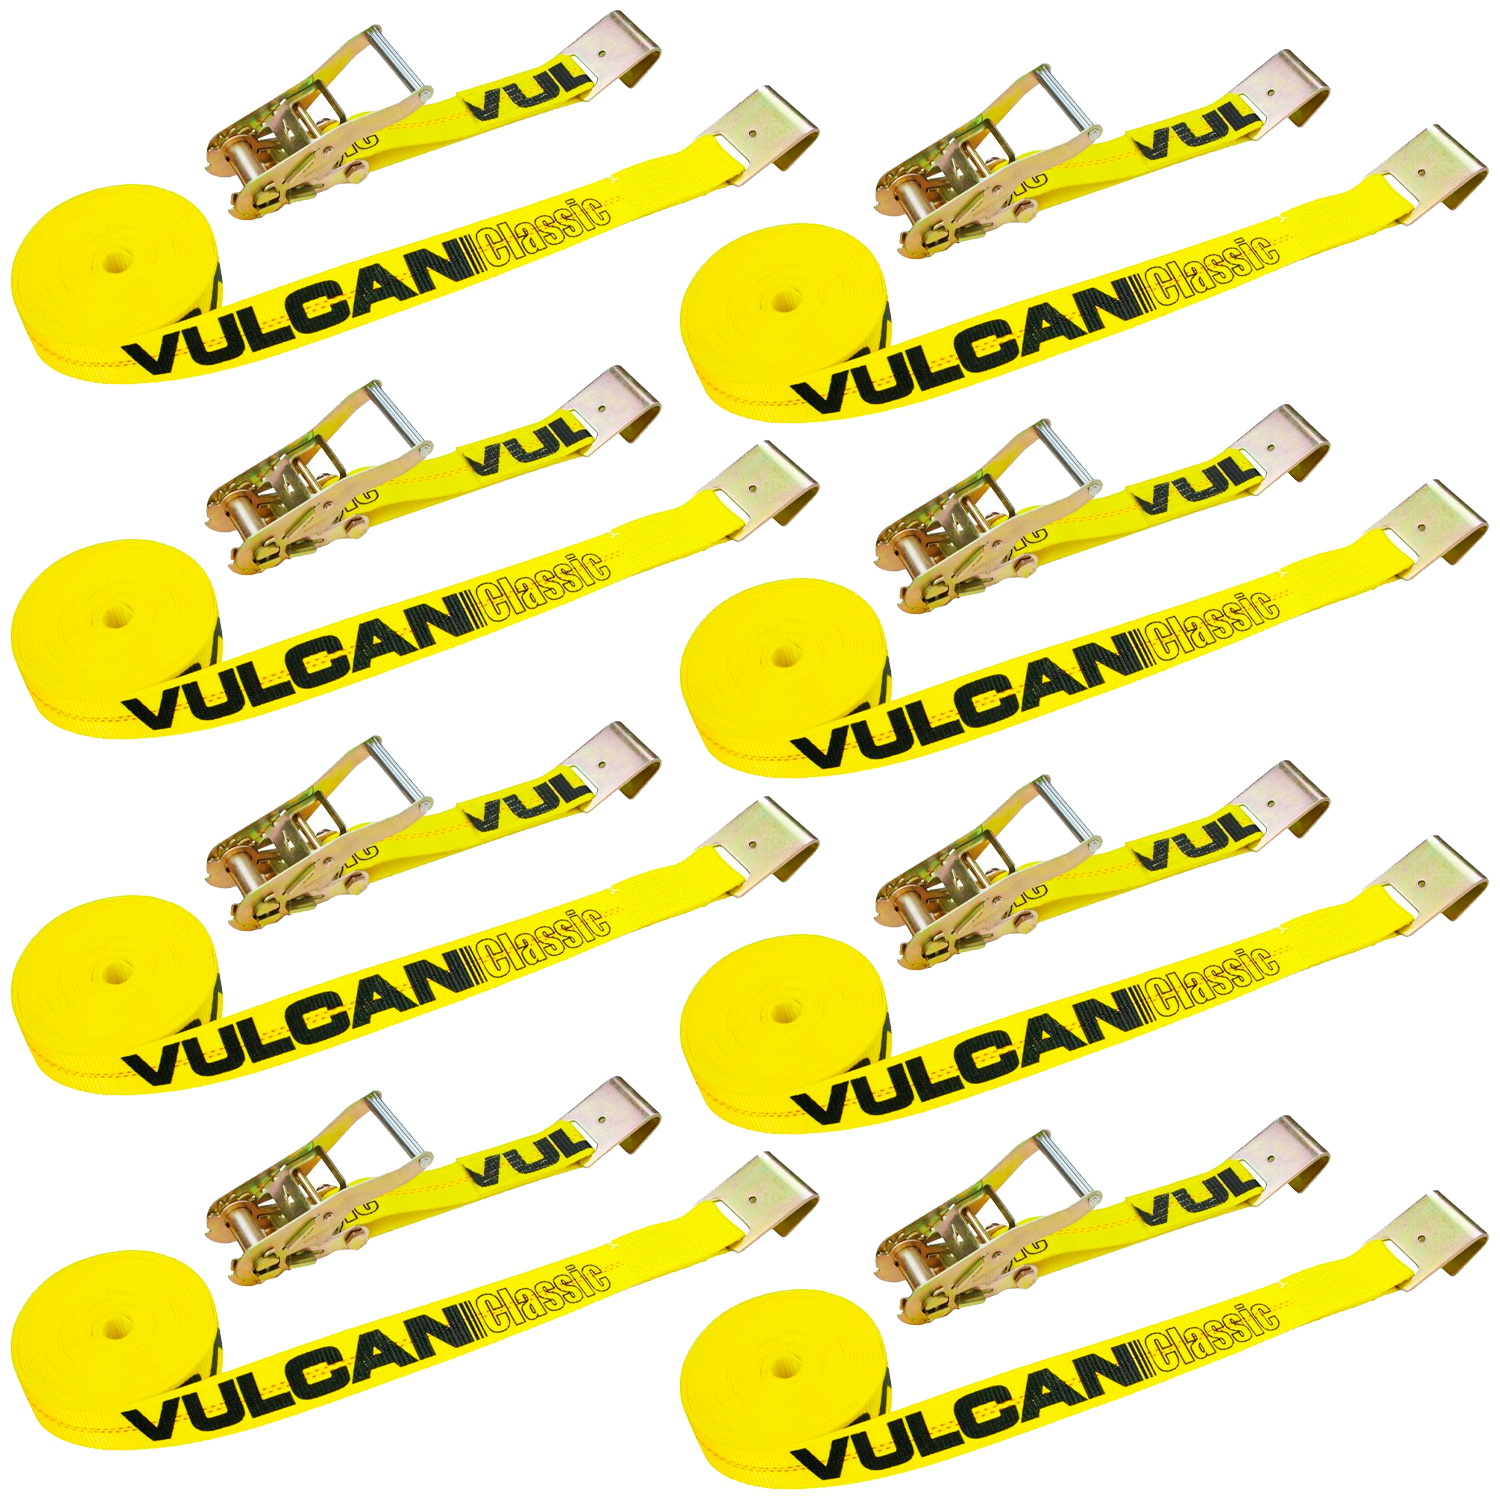 VULCAN Ratchet Strap with Flat Hooks - 2 Inch - 3,300 Pound Safe